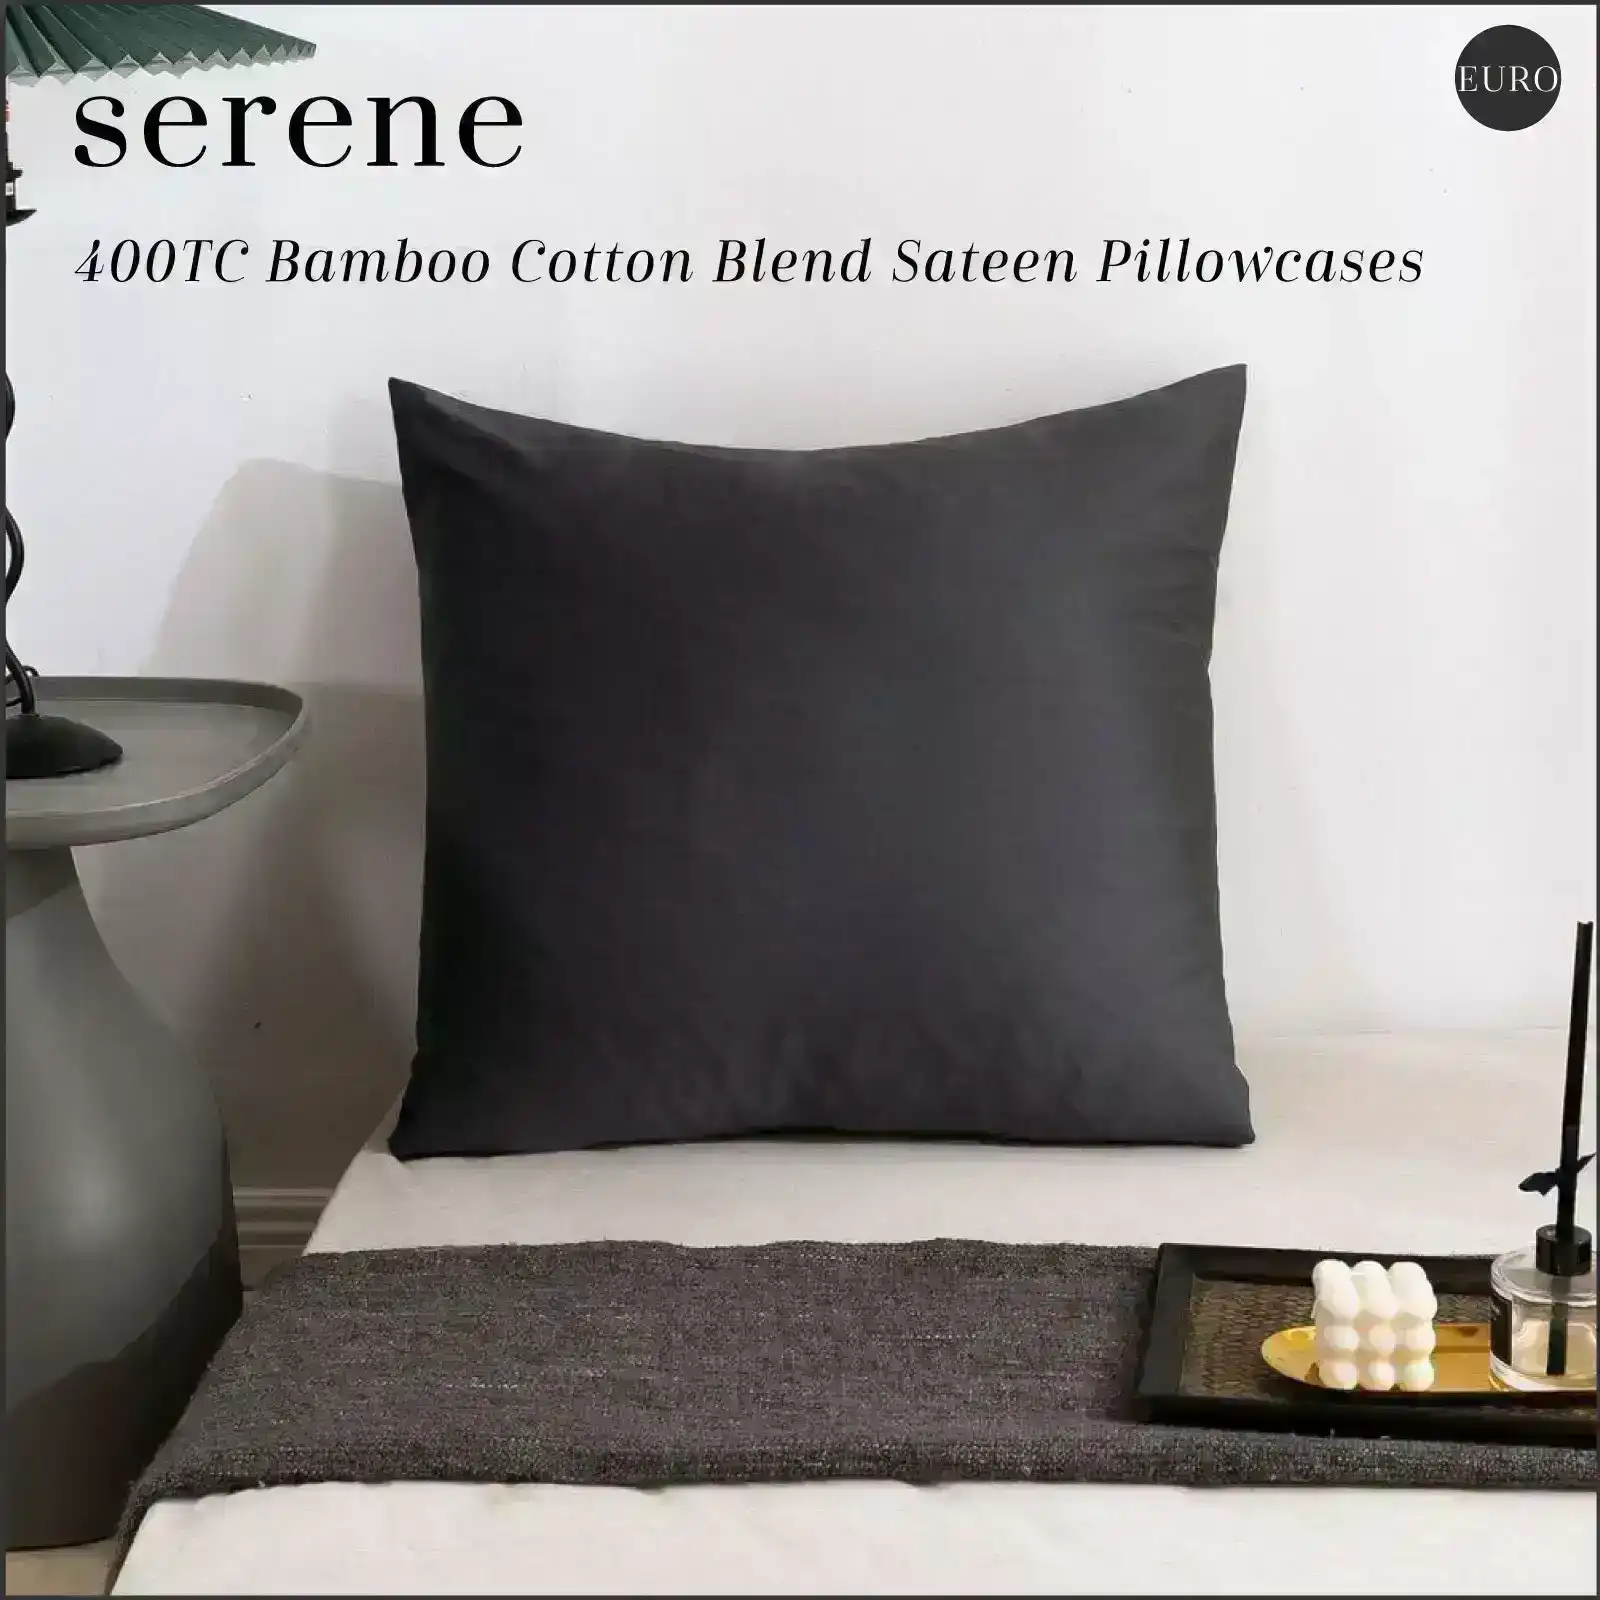 Serene 400TC Bamboo Cotton Blend Sateen Euro Pillowcase CHARCOAL